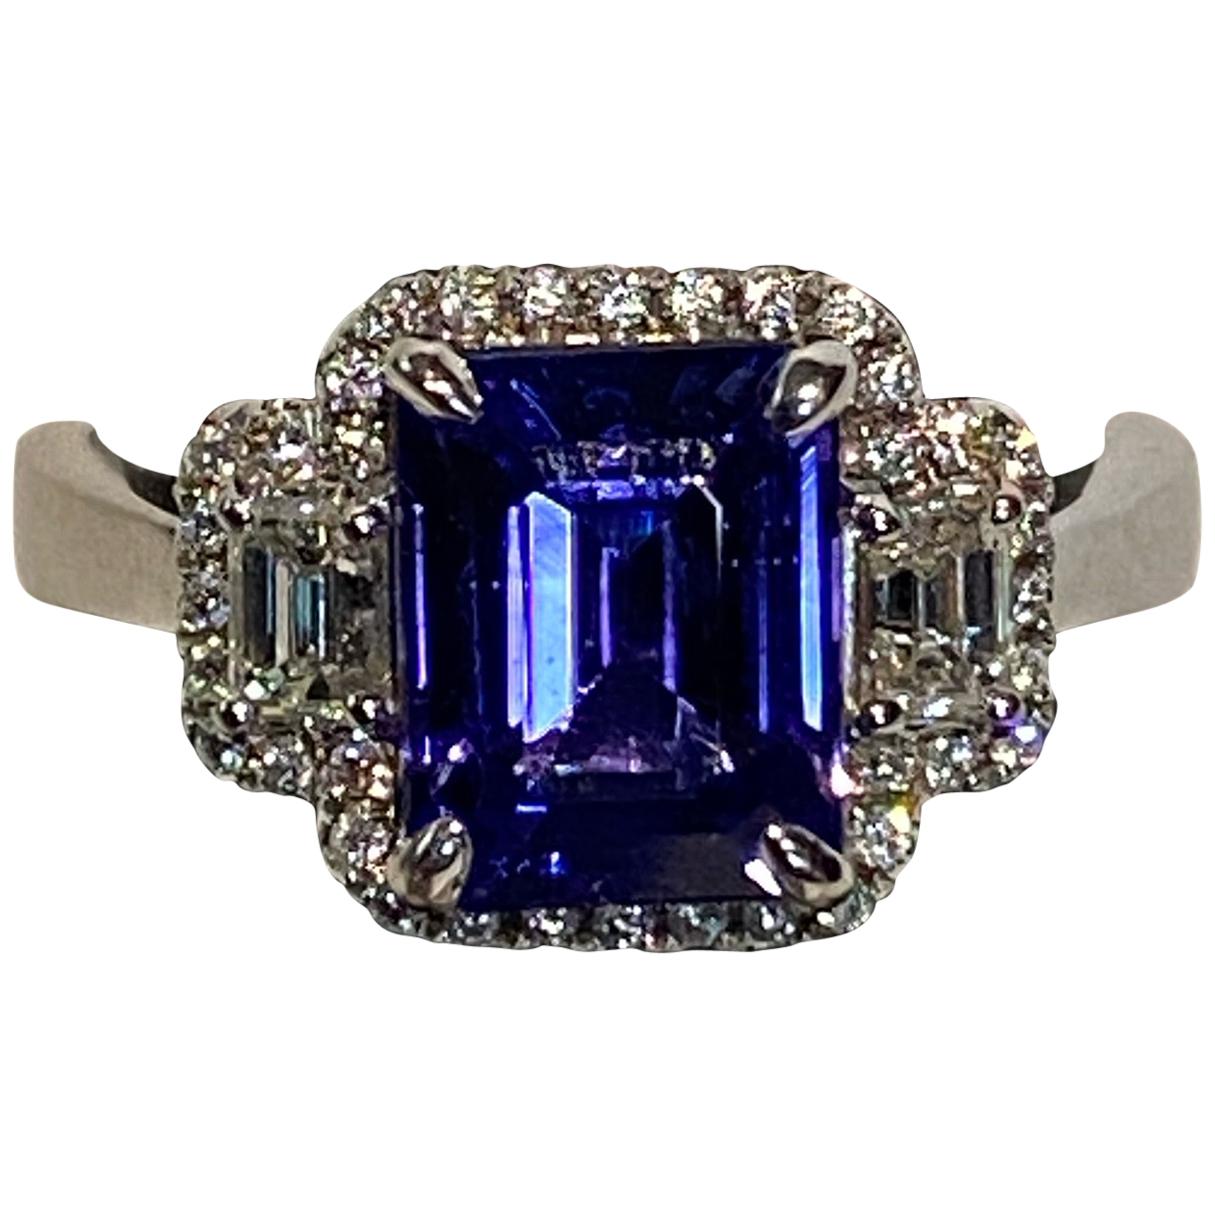 2.75 Carat Emerald Cut Tanzanite Diamond Ring